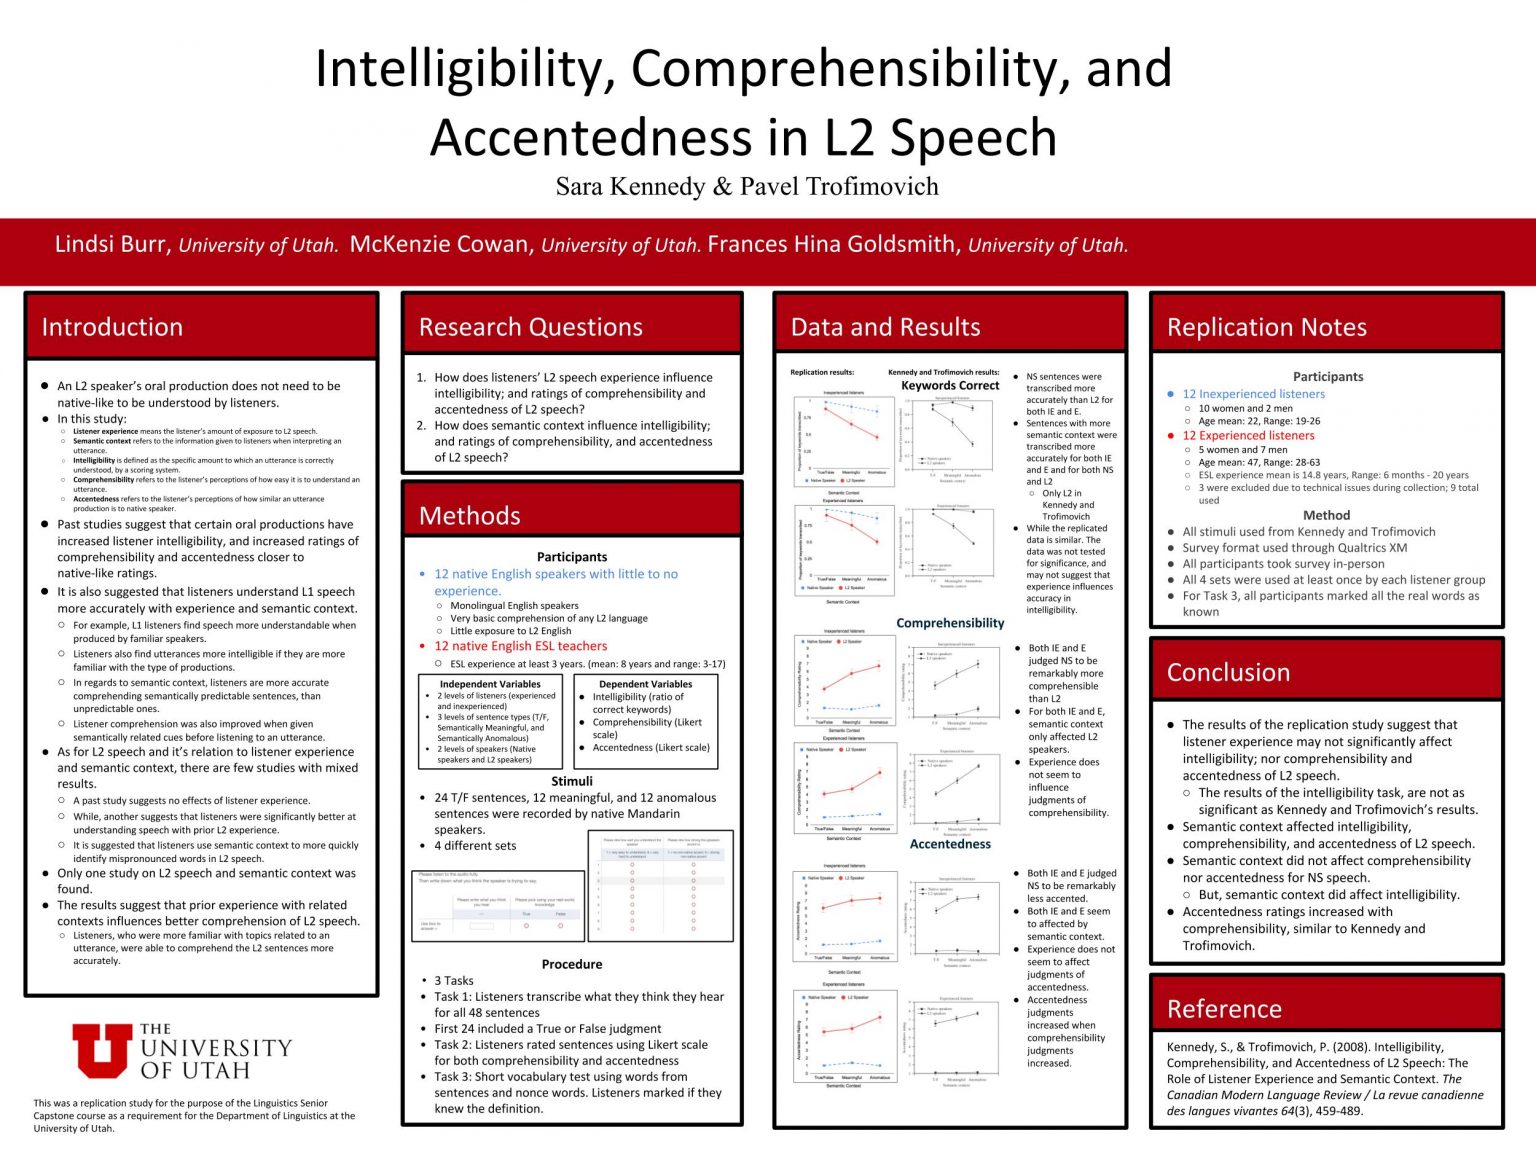 Mckenzie Cowan, Lindsi Burr, Frances Hina Goldsmith - Intelligibility, Comprehencibility, and Accentedness in L2 Speech